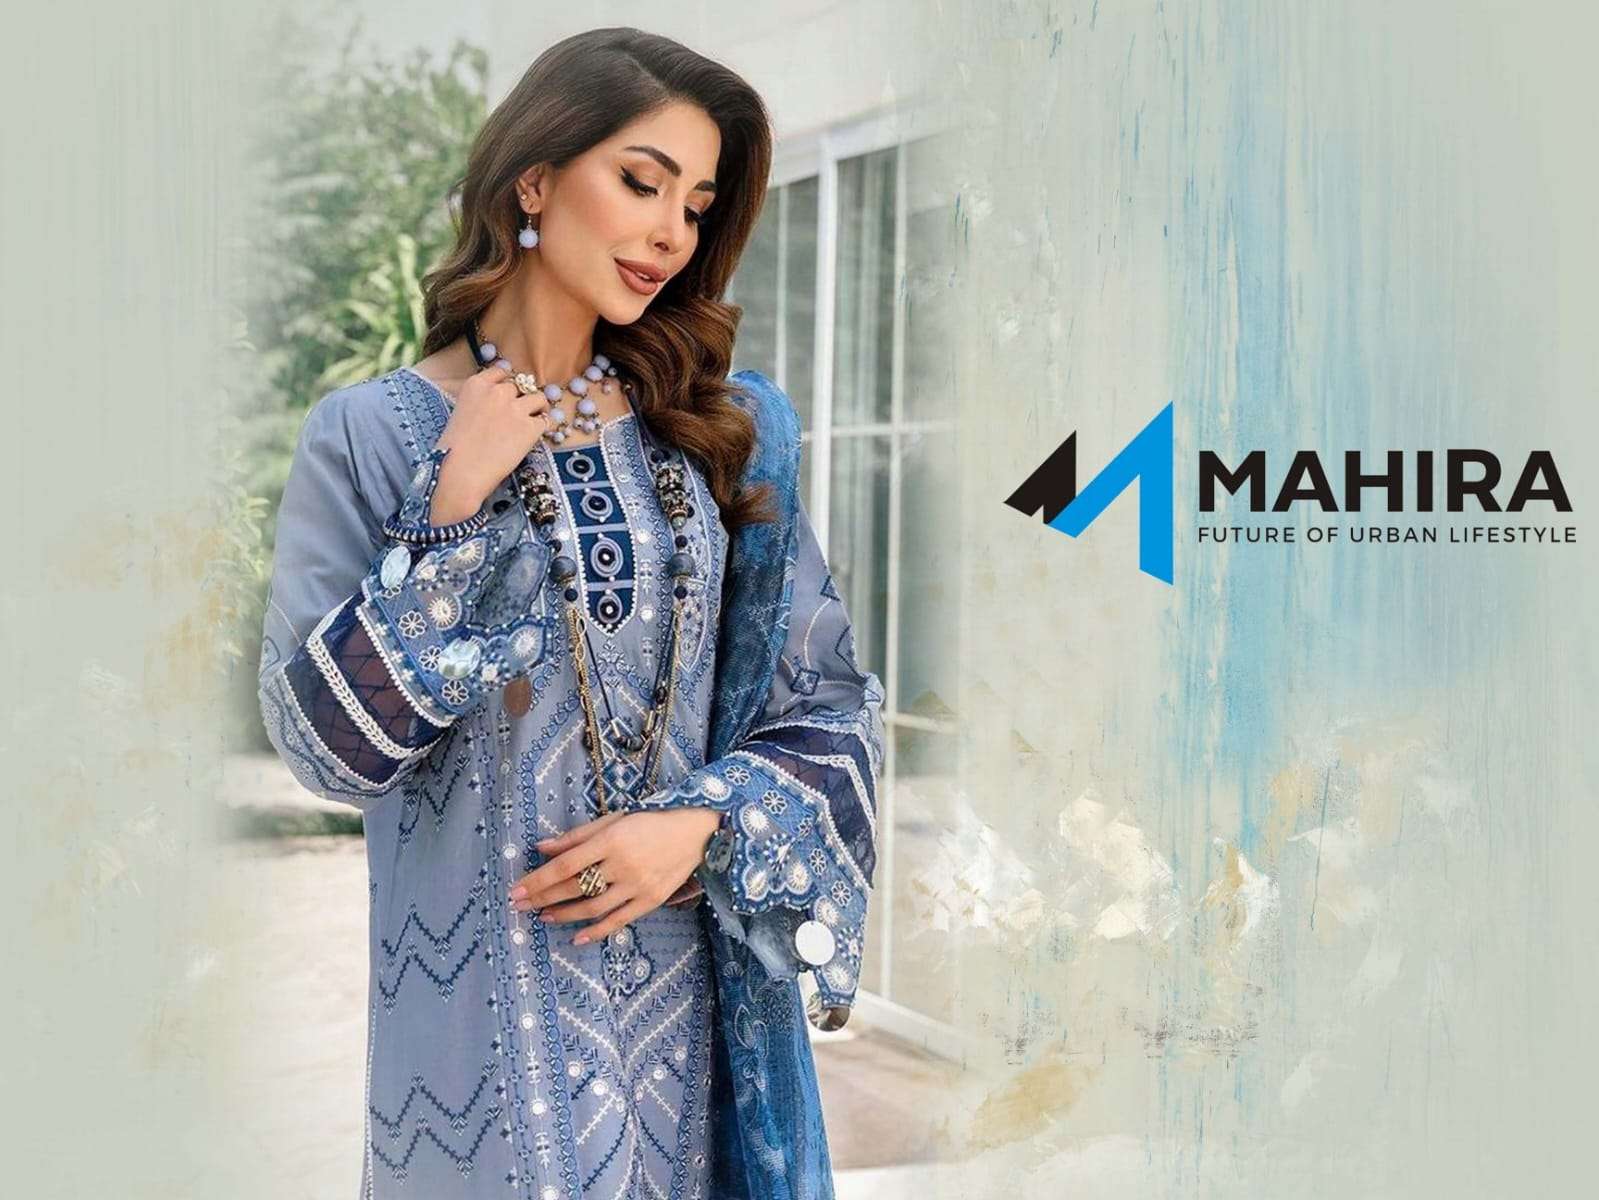 mahira mahira vol-1 1001-1012 series designer pakistani salwar kameez online supplier surat 